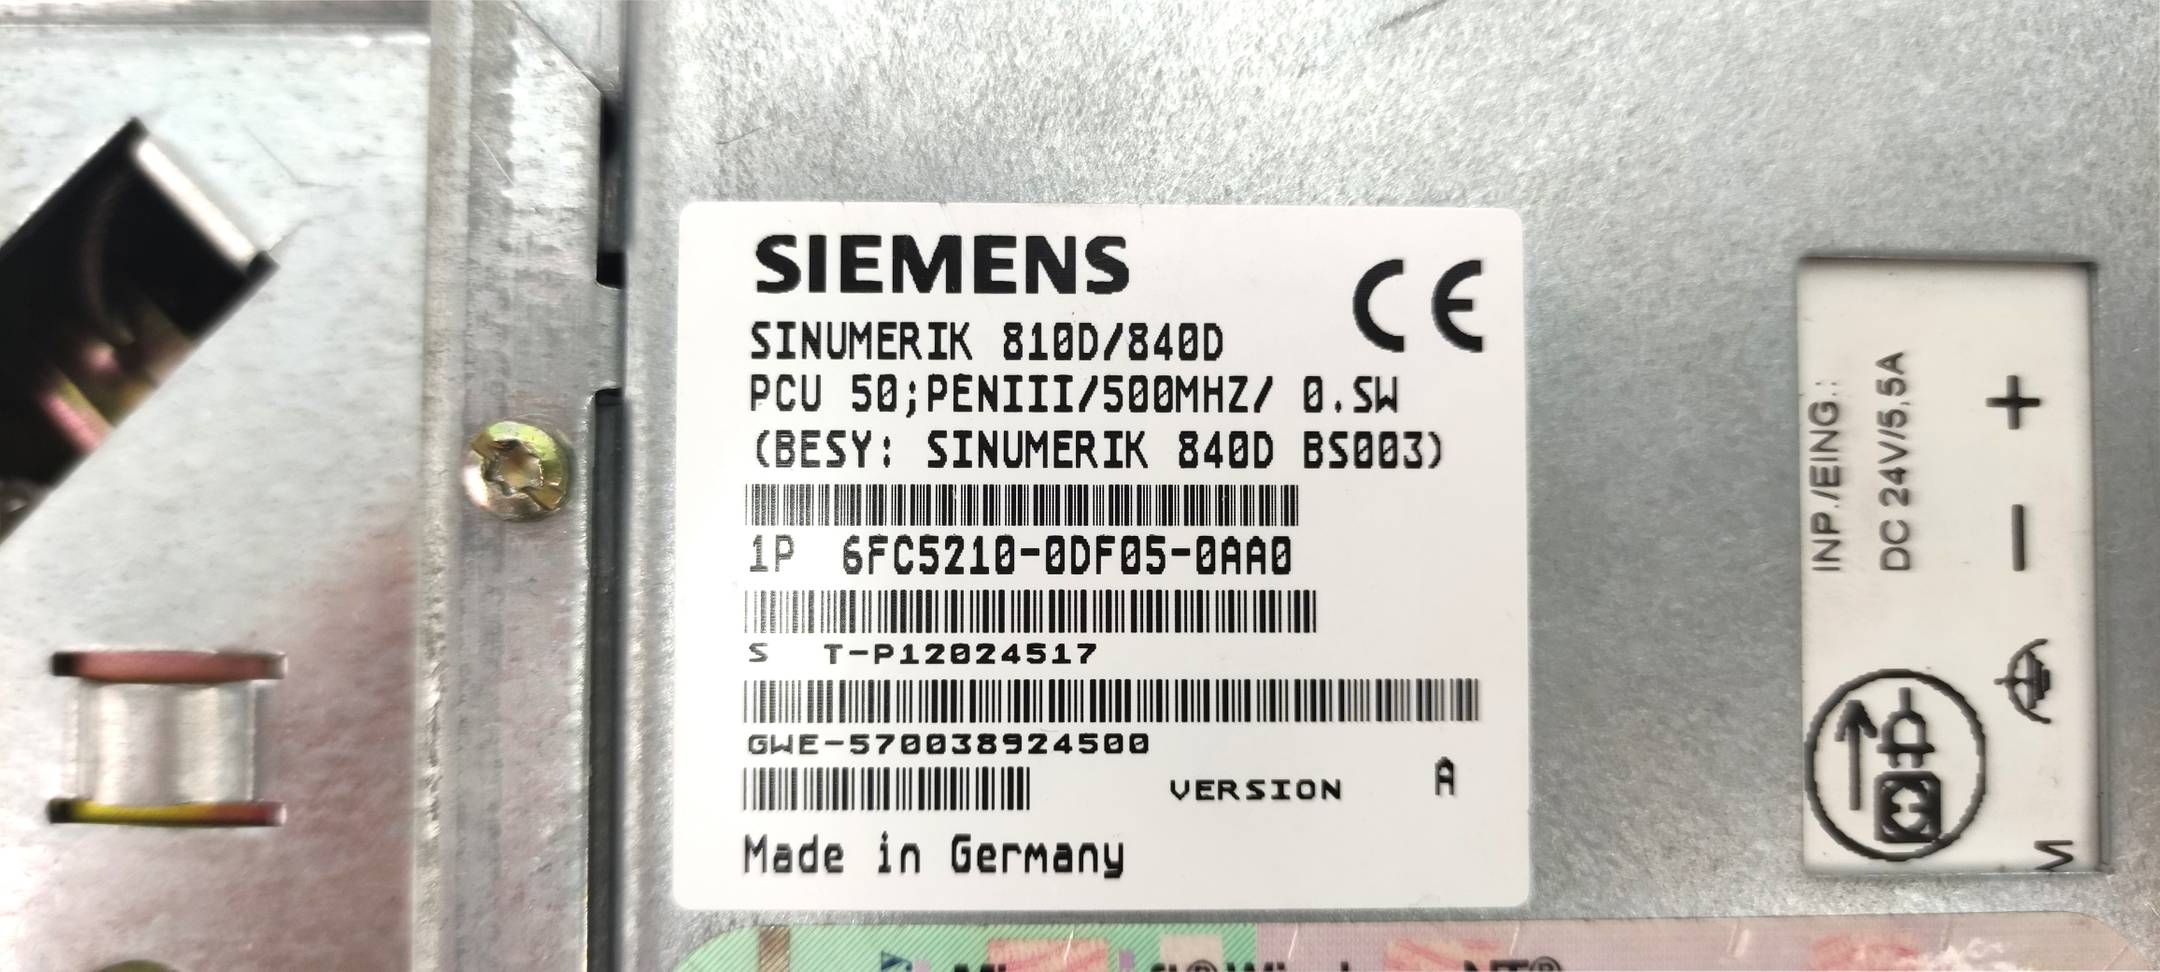 Siemens sinumerik 810D/840D PCU 50;Pen 6FC5210-0DF05-0AA0 inkl. Festplatte